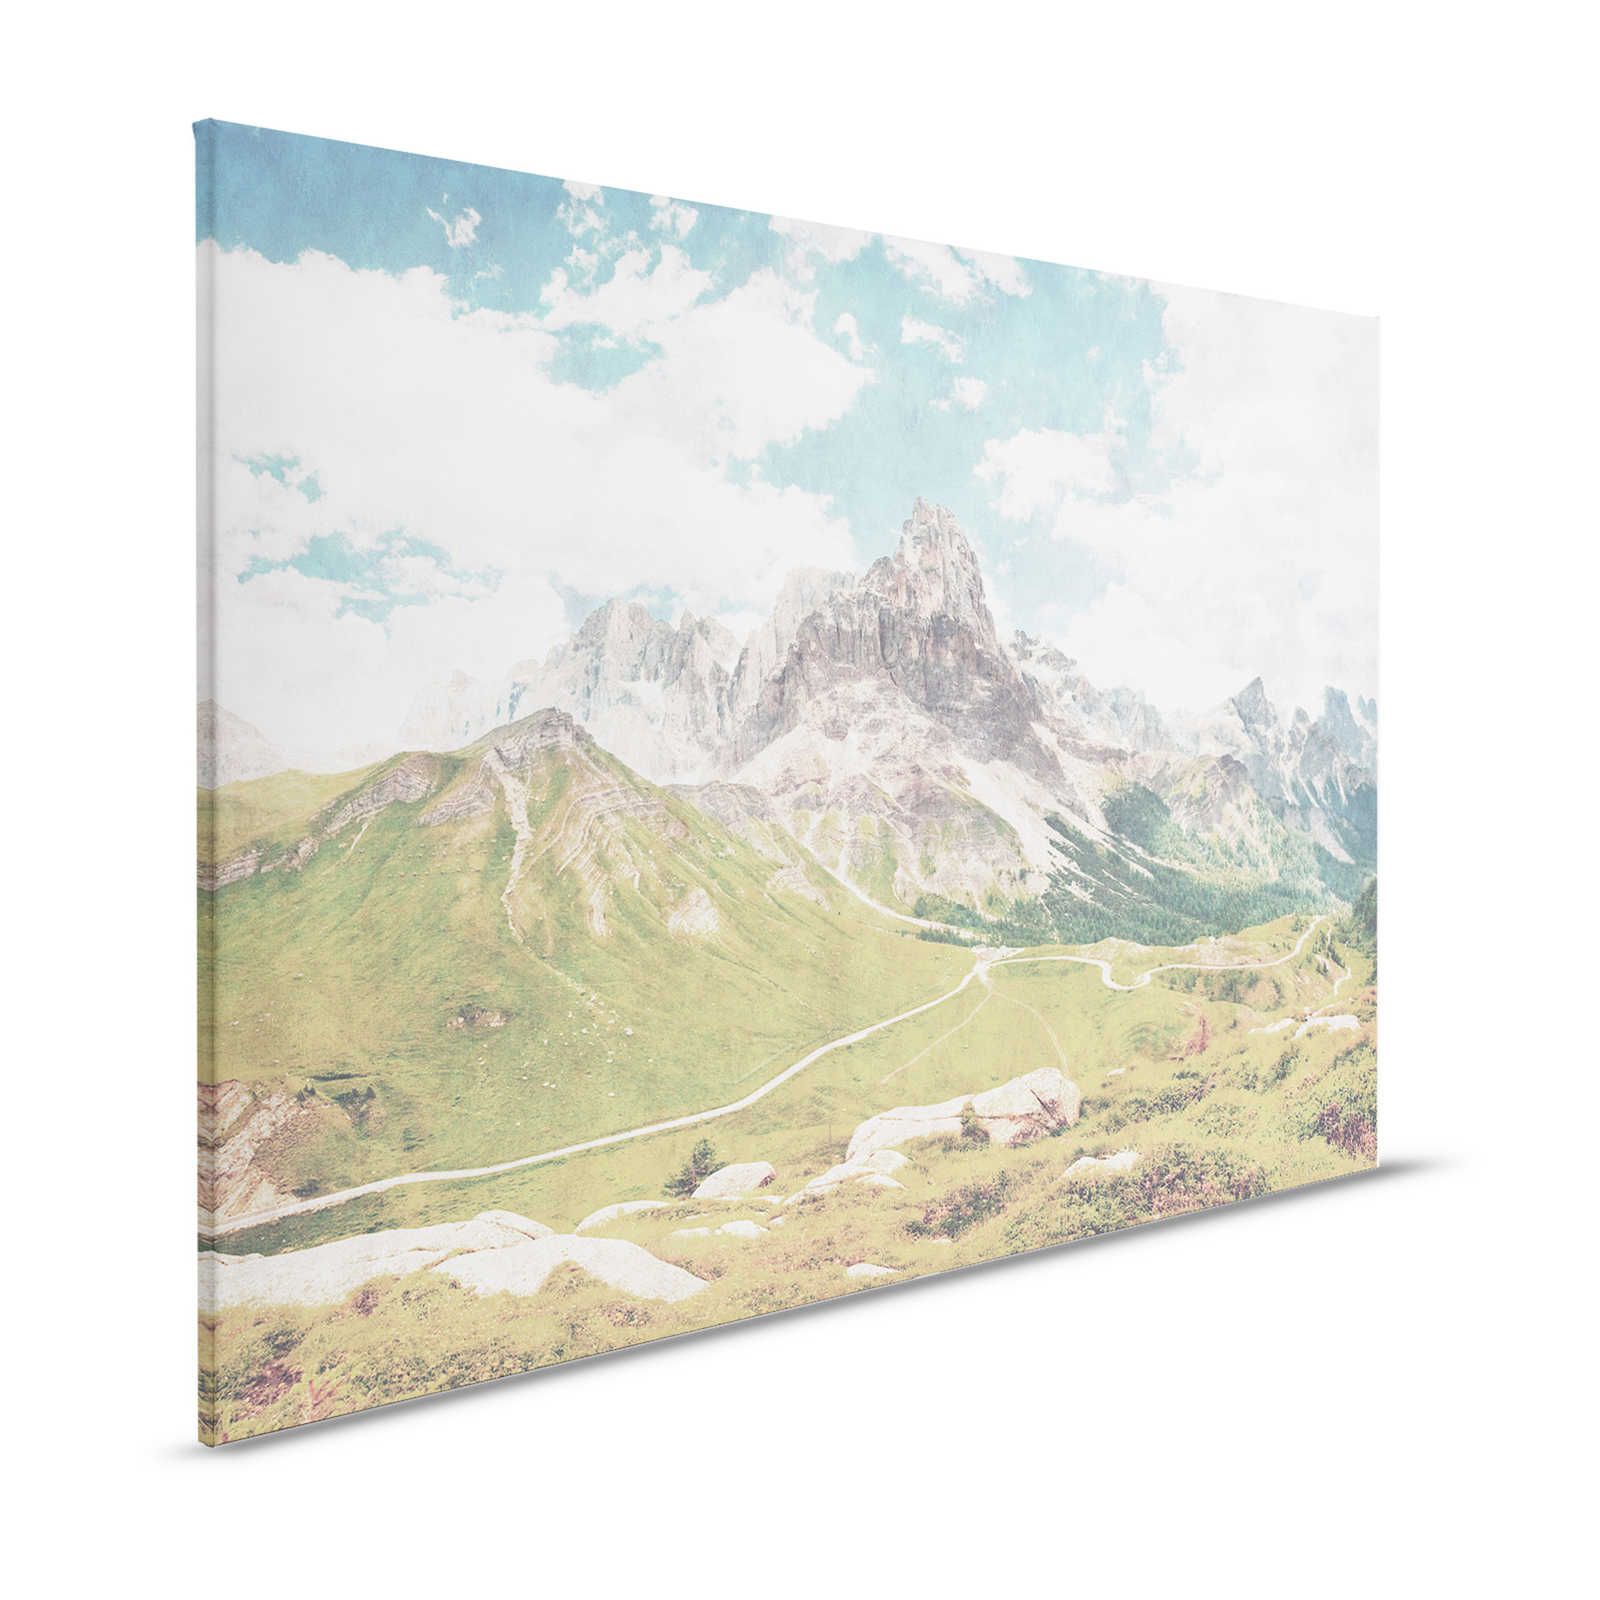 Dolomiti 2 - Canvas painting Dolomites Retro Photography - 1.20 m x 0.80 m
